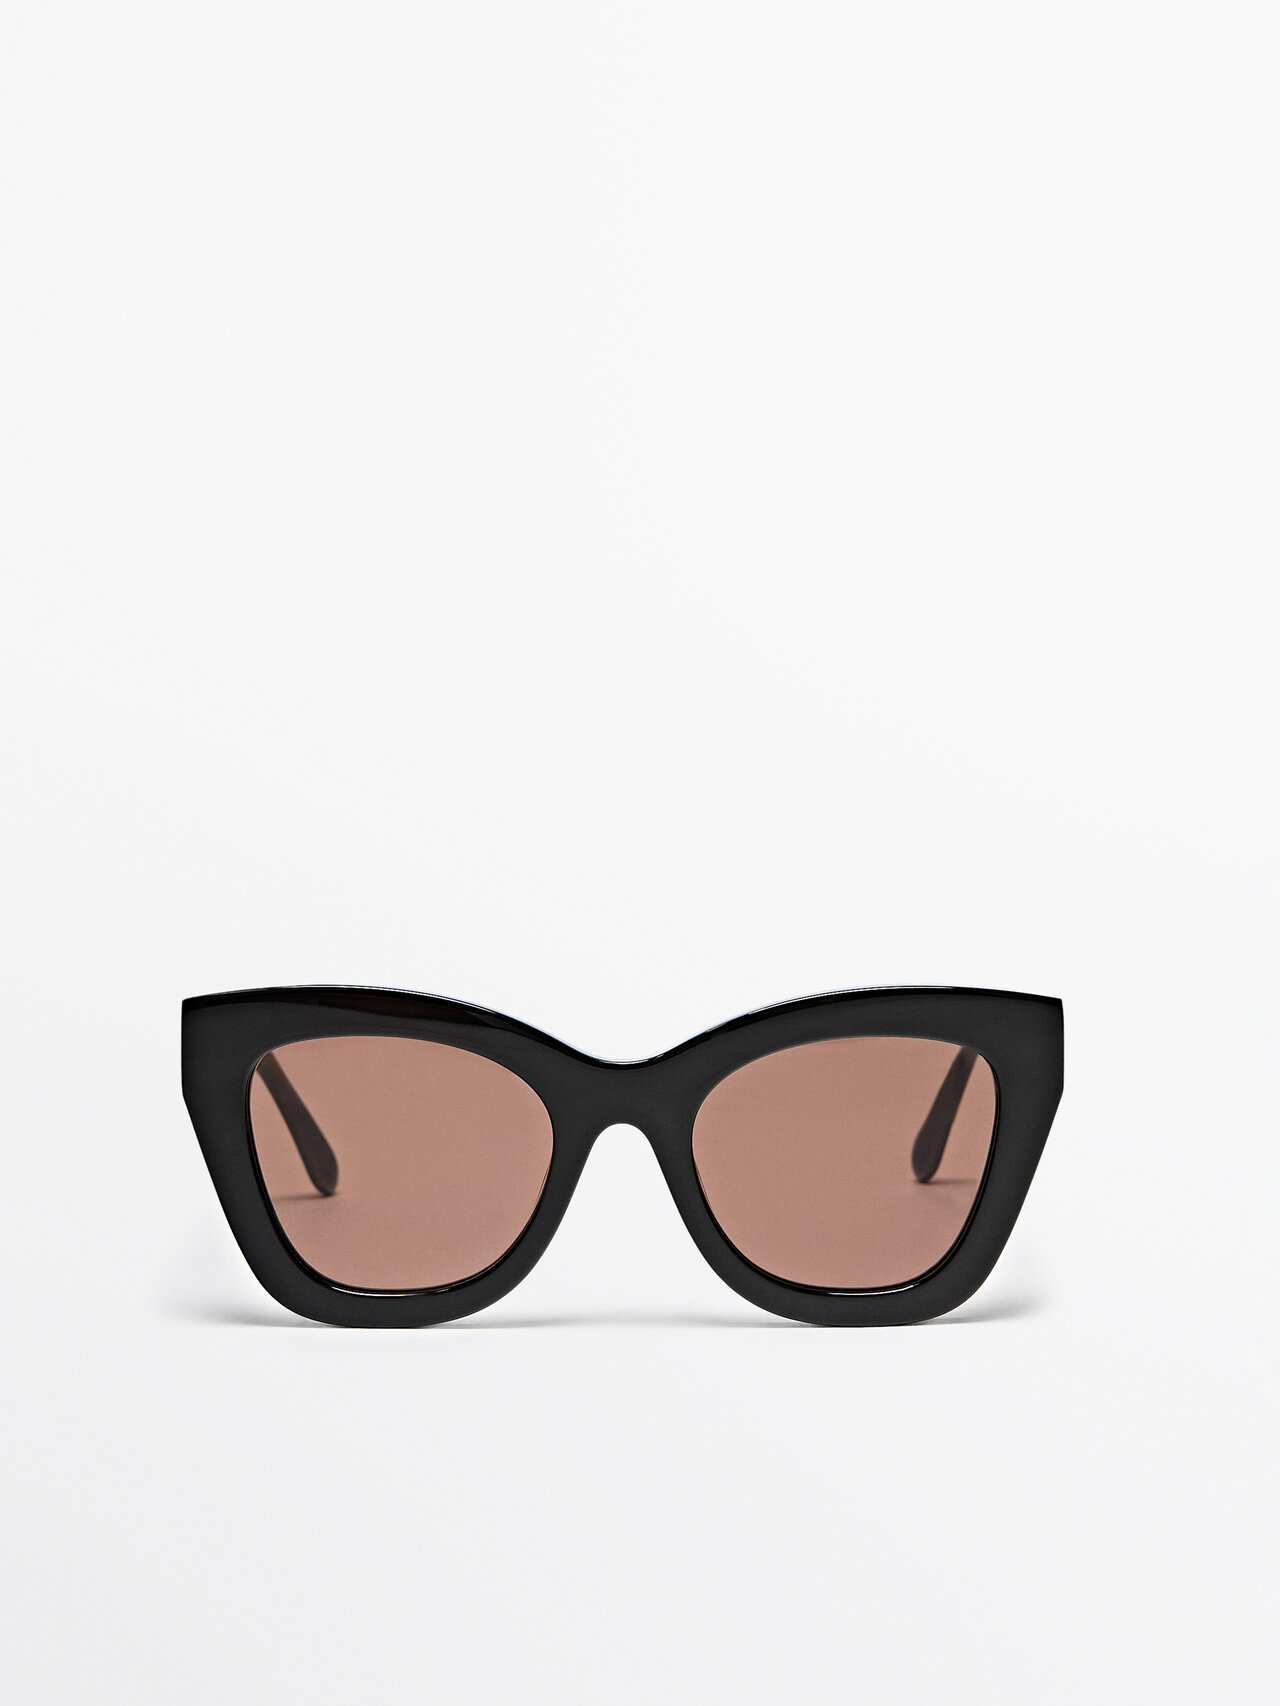 Massimo Dutti Cateye Sunglasses In Black